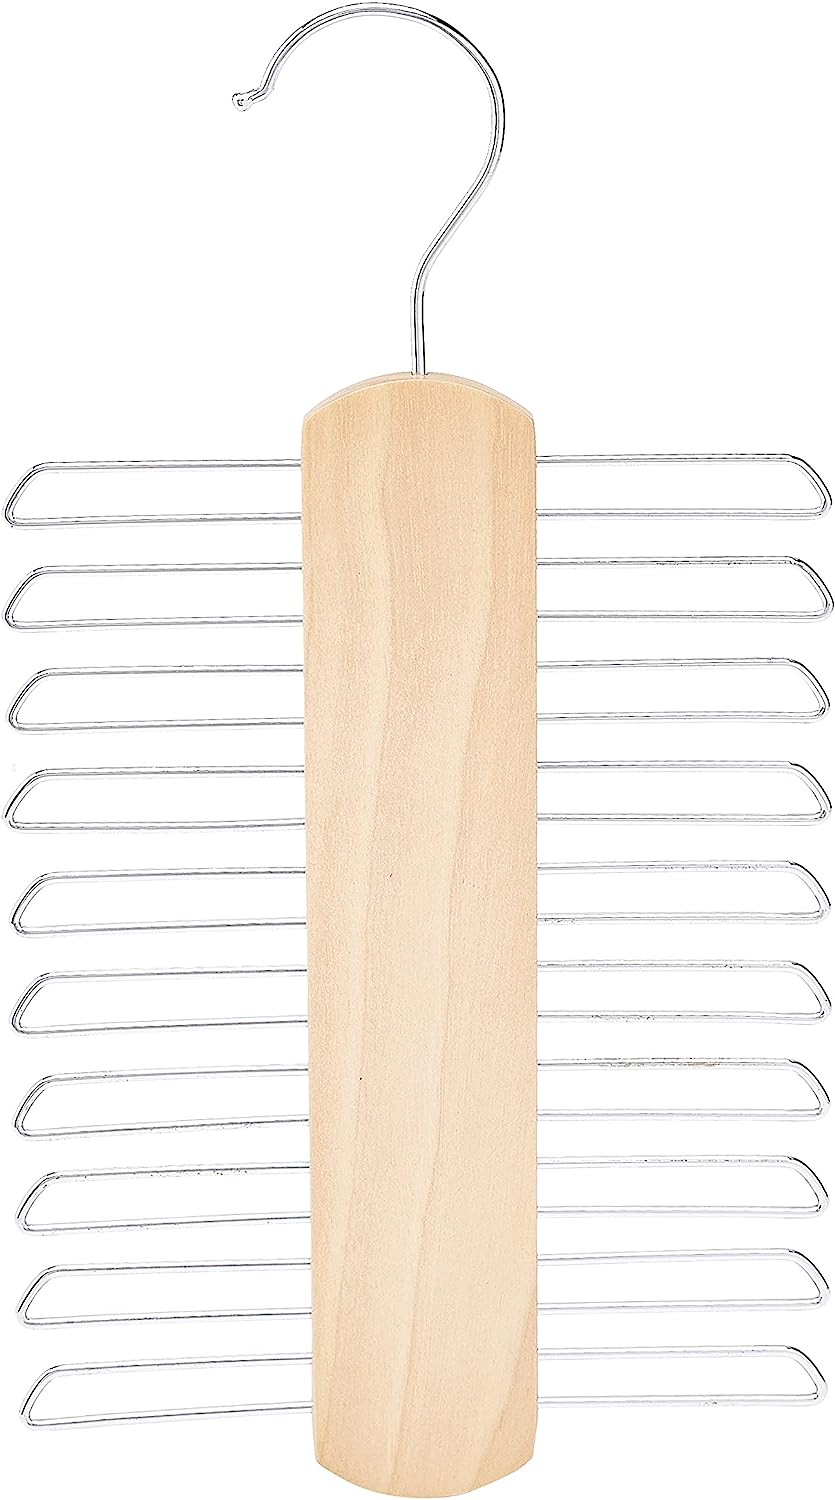 2-Pack Amazon Basics 20-Bar Wooden Tie Hanger & Belt Rack $5.98 - Amazon